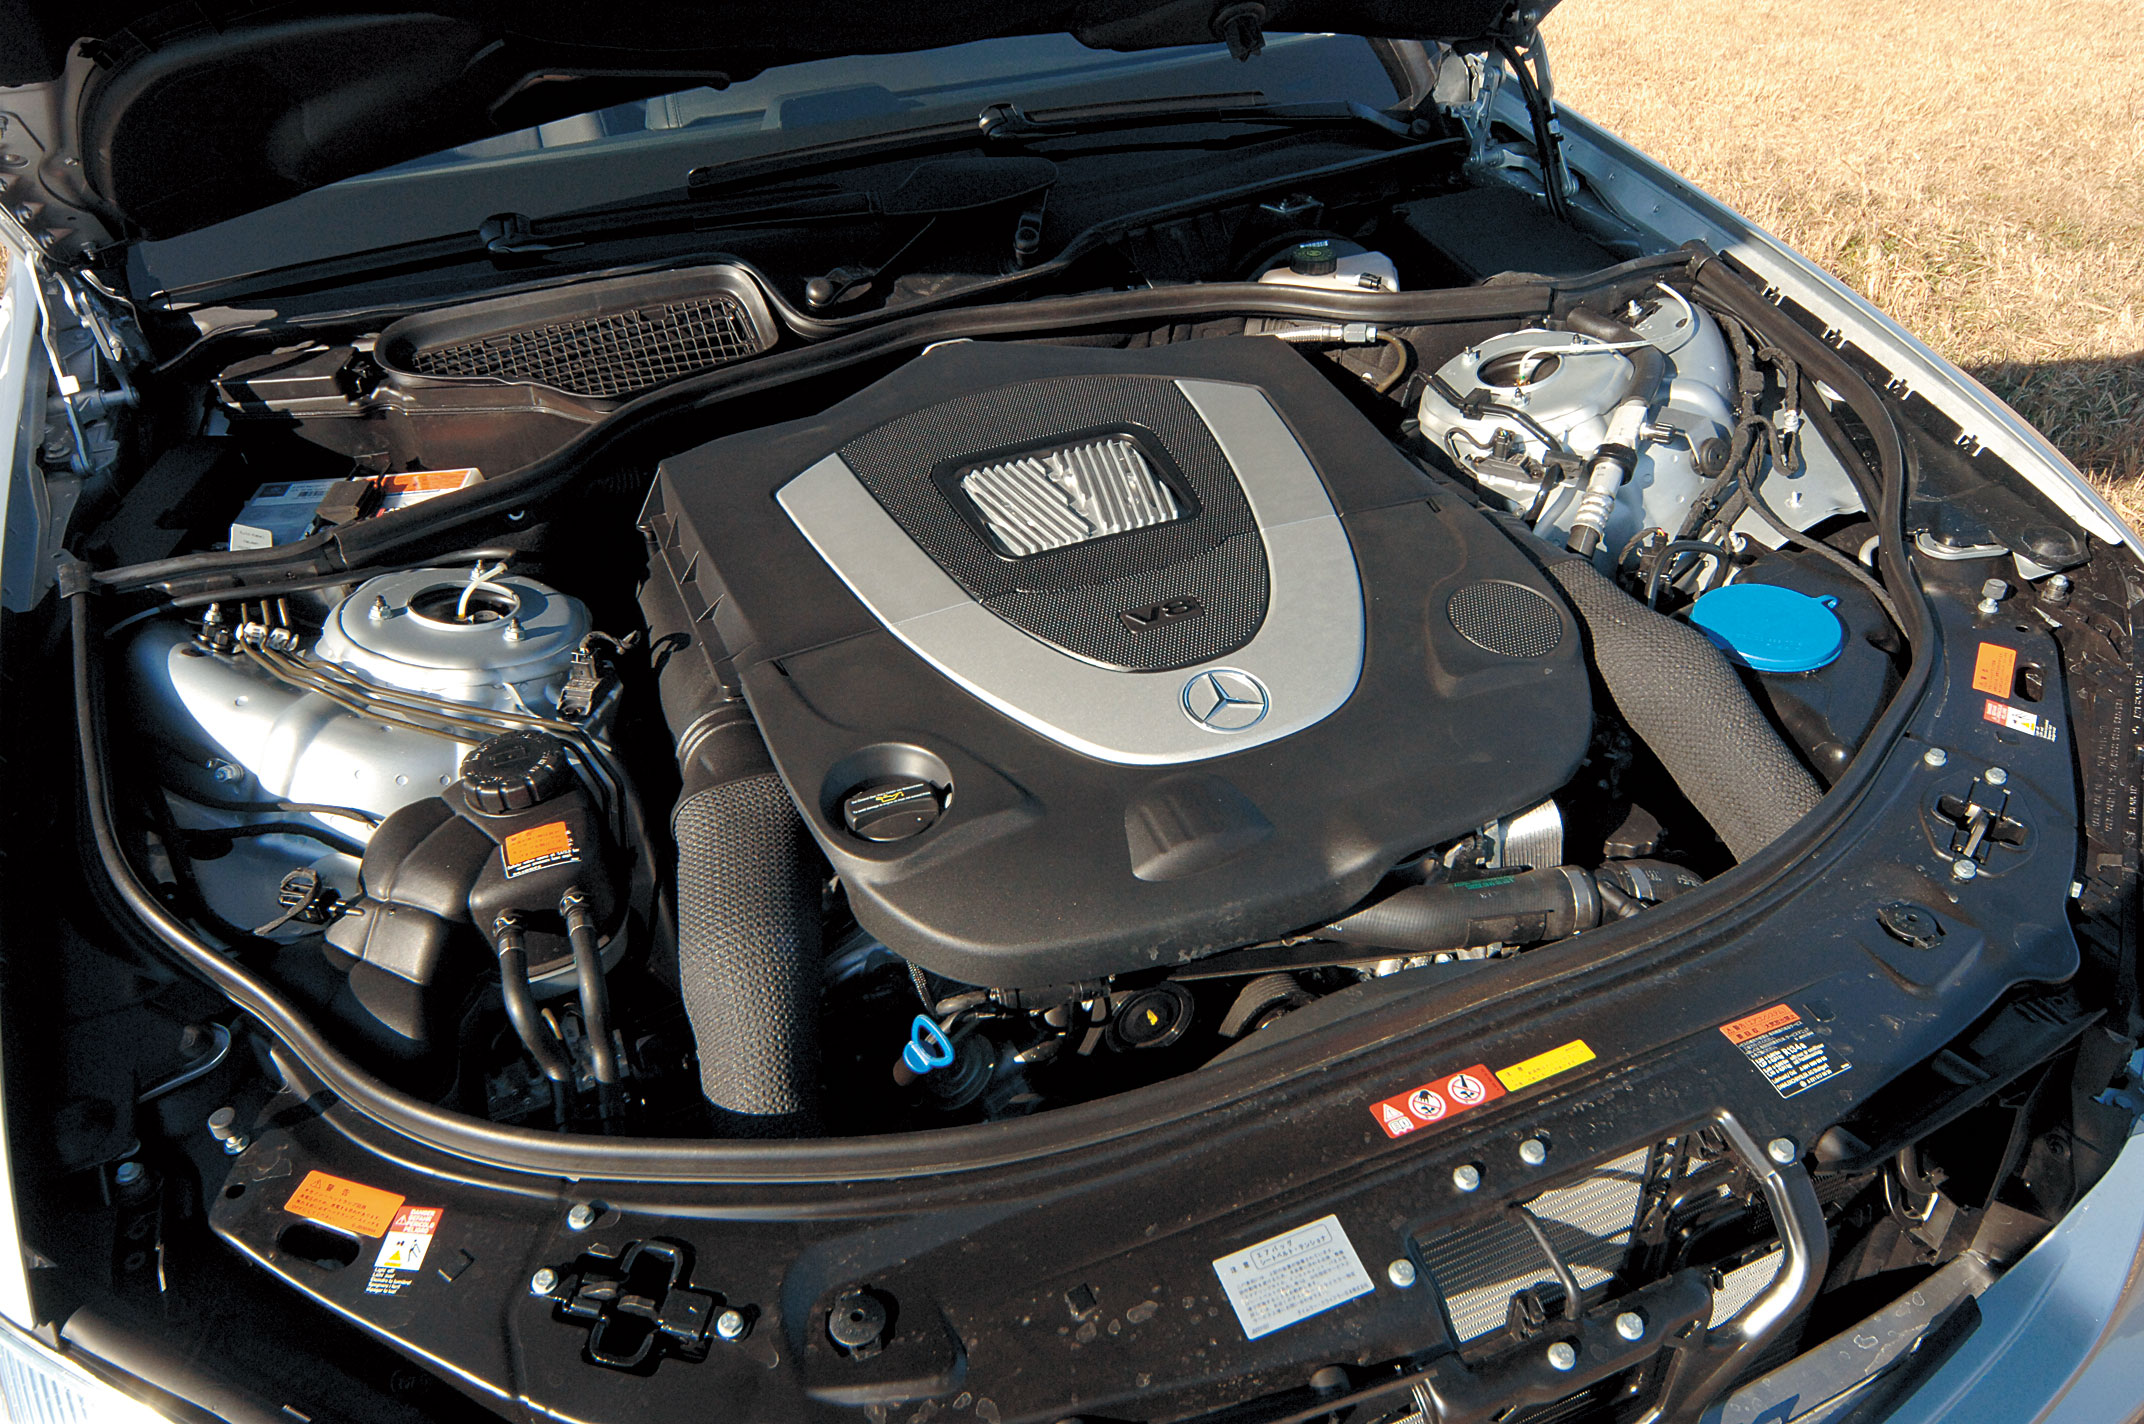 S500に搭載される5.5L、V8エンジンは最高出力387馬力、最大トルク54.0kgmを発揮する。高回転までシャープに吹ける